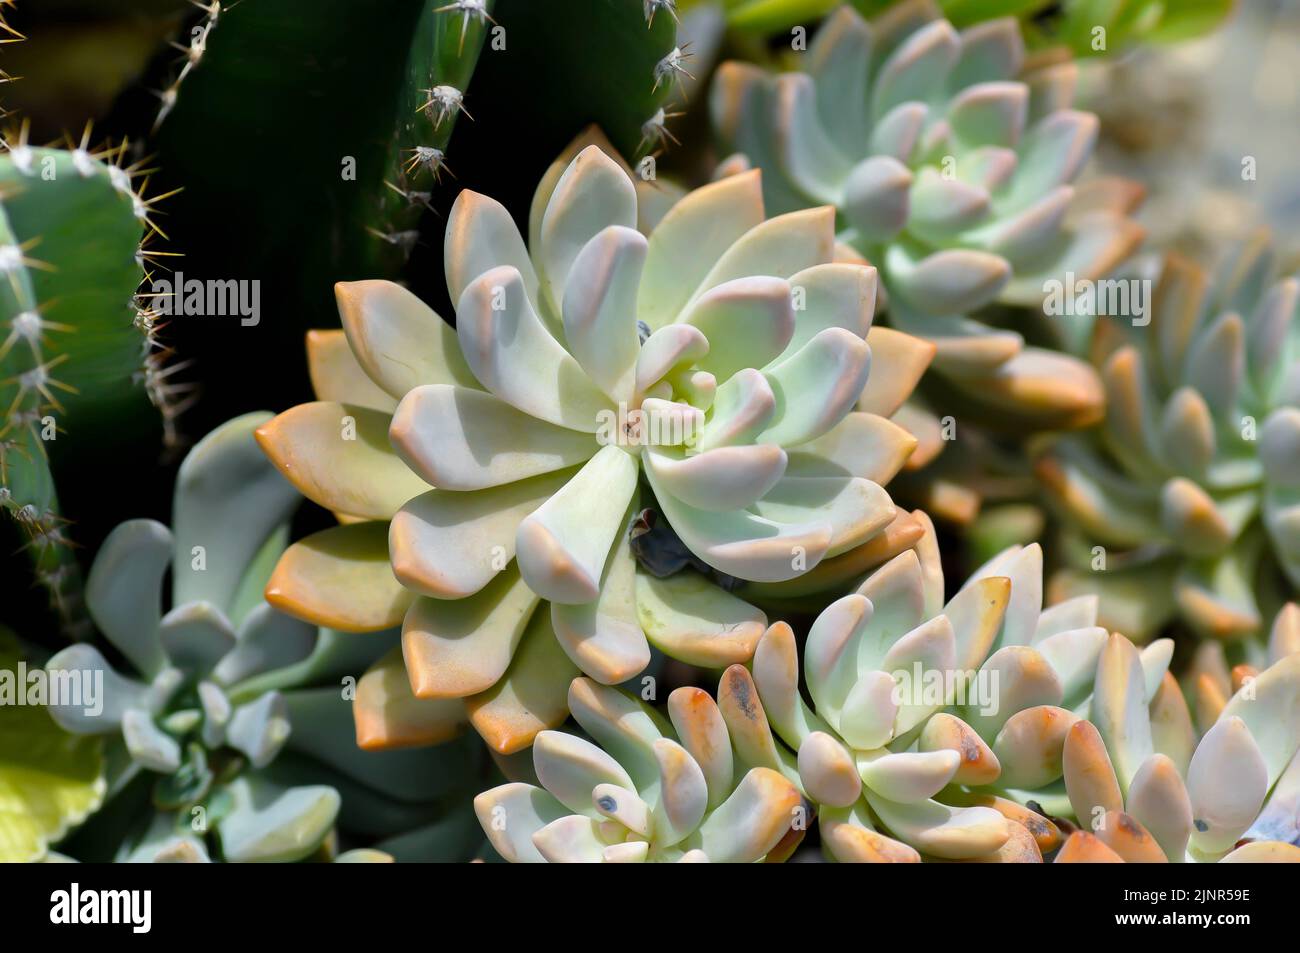 Kalanchoe, Kalanchoideae or Crassulaceae or K blossfeldiana or Magnoliophyta or succulent or cactus plant Stock Photo